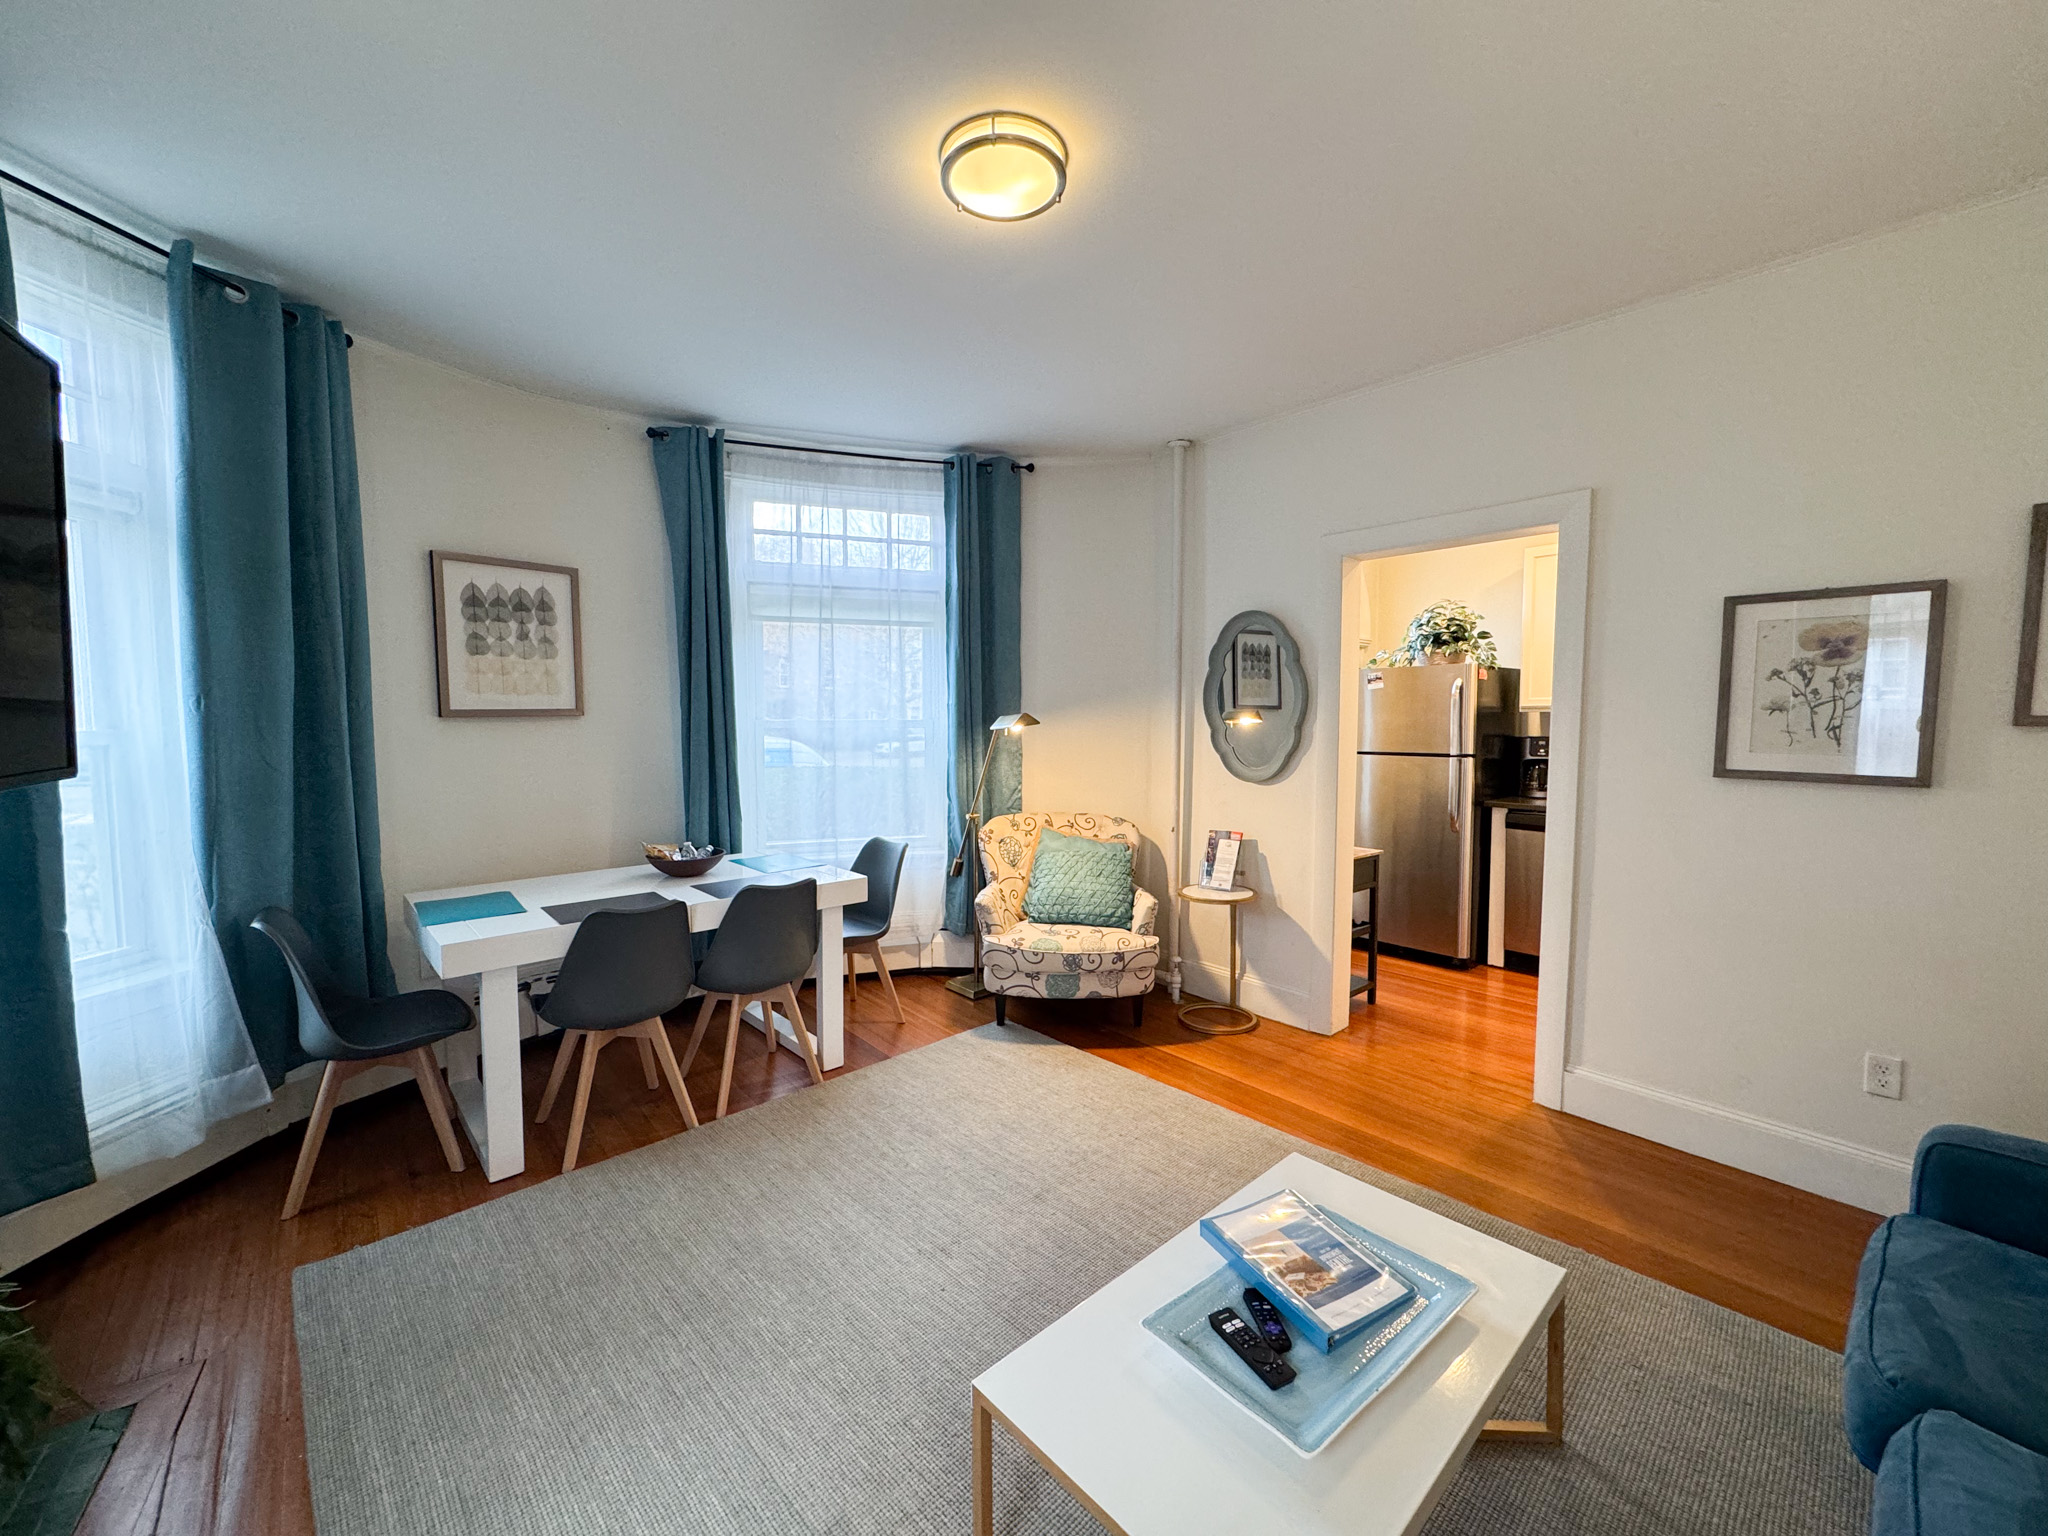 Photos of apartment on Beacon St.,Brookline MA 02445